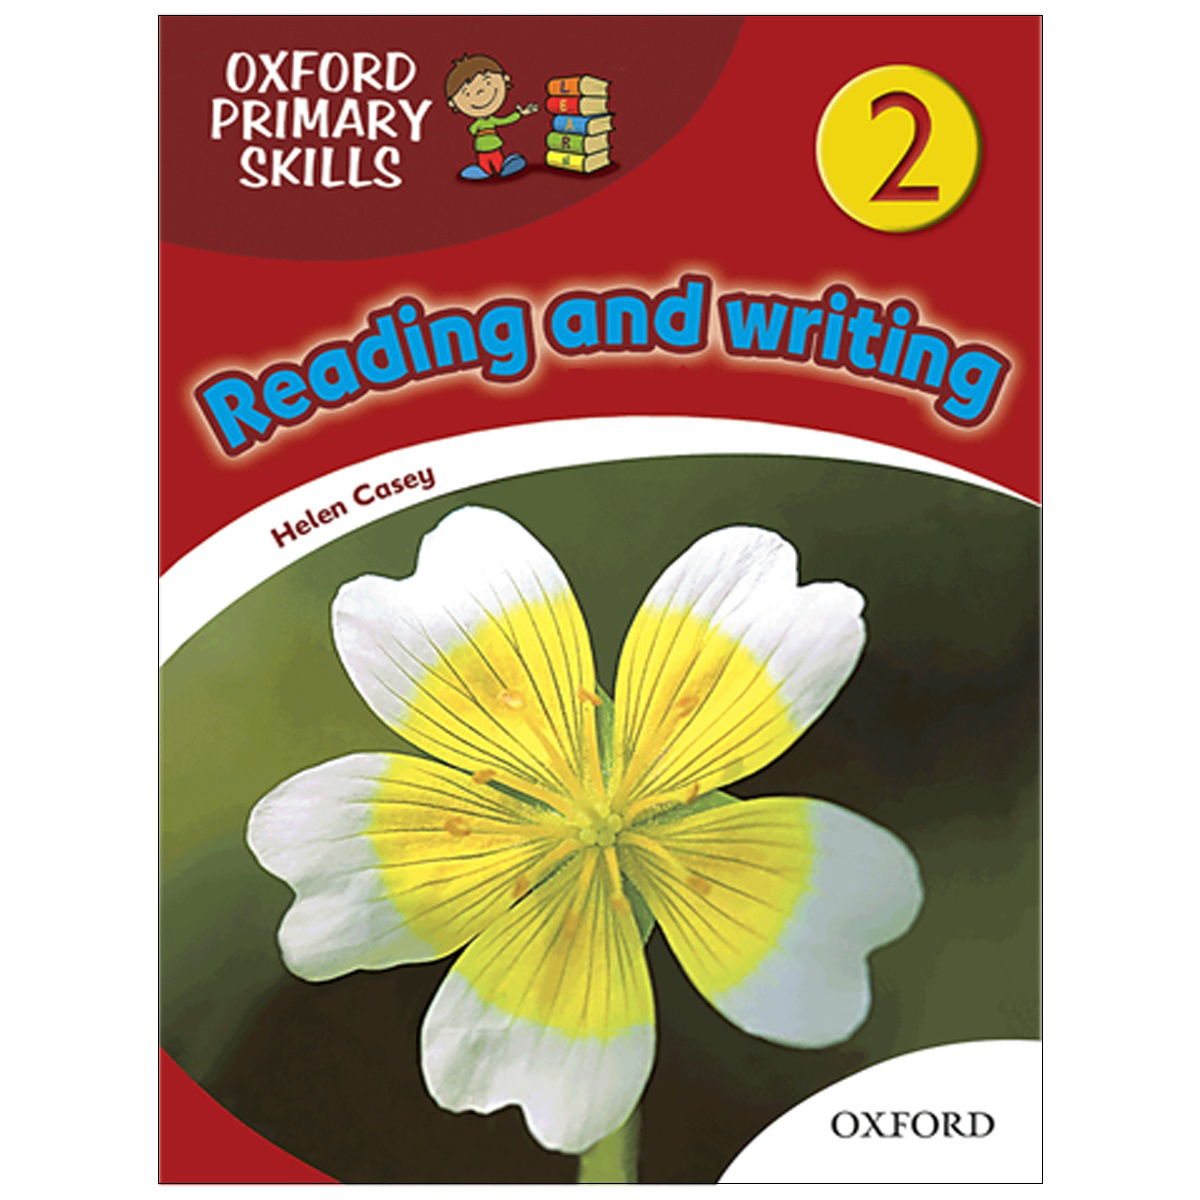 British Oxford Primary Skills Reading and Writing 2